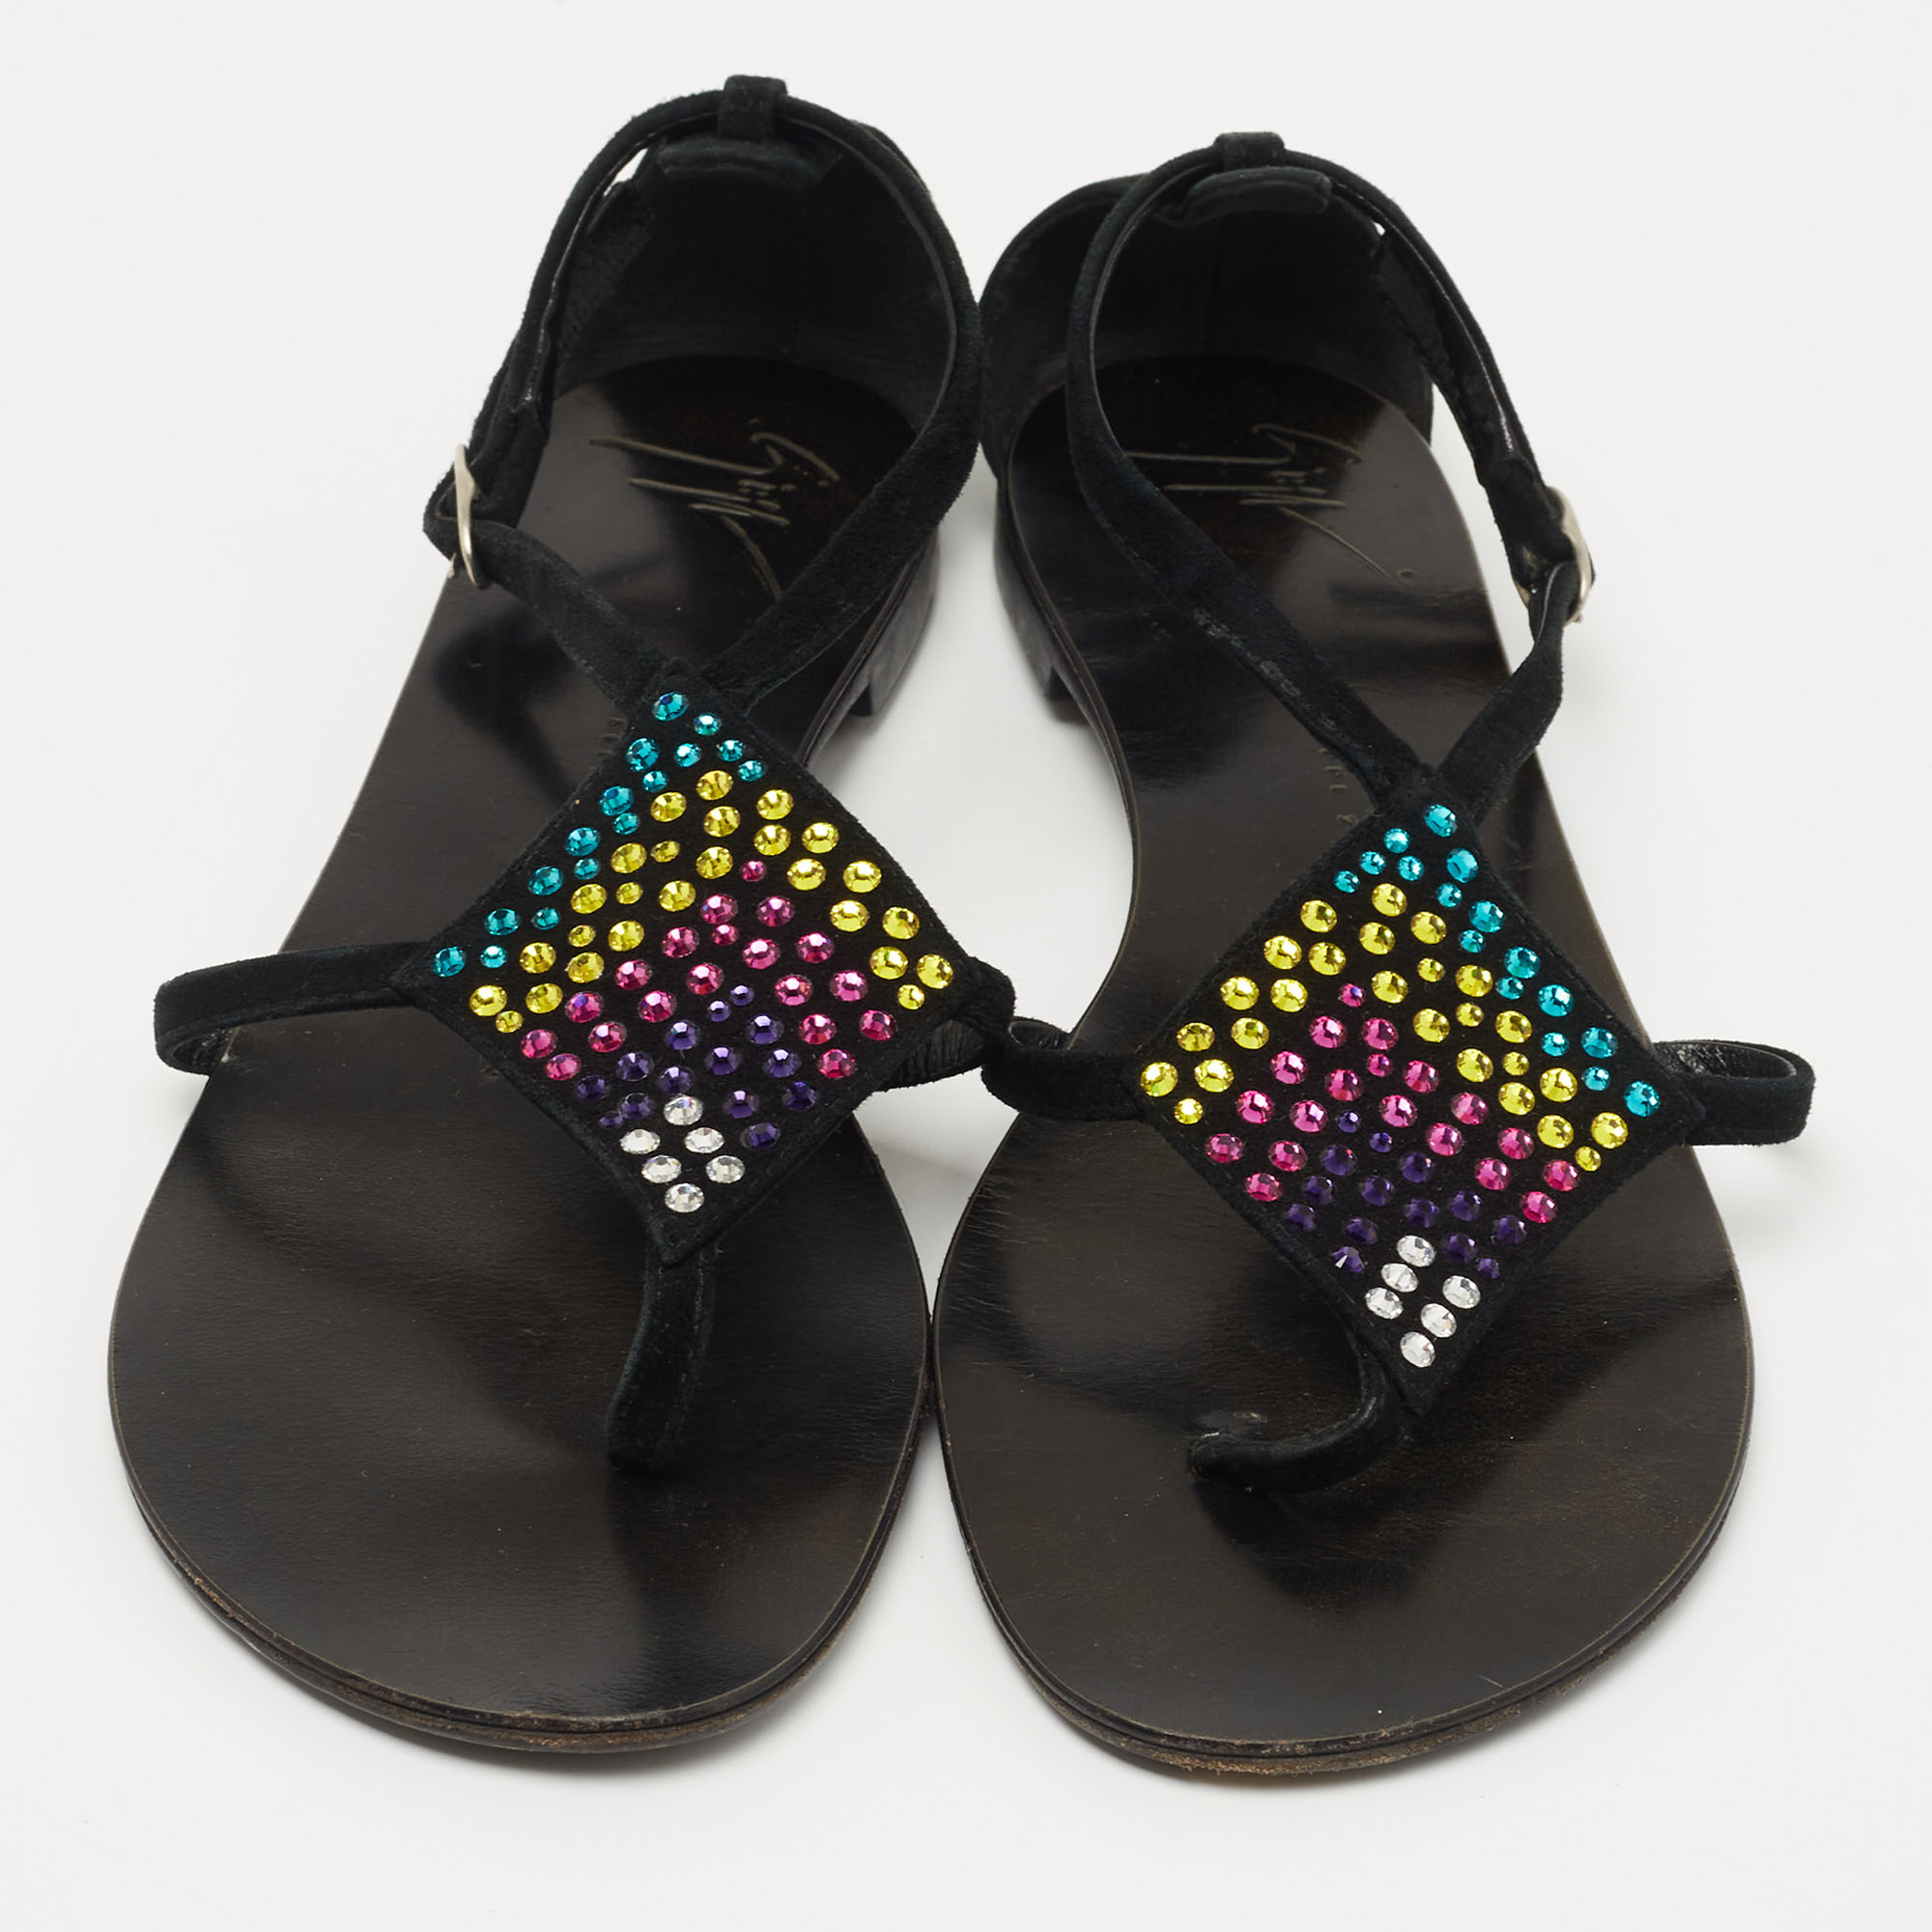 Giuseppe Zanotti Black Suede Crystal Embellished Thong Flat Sandals Size 36